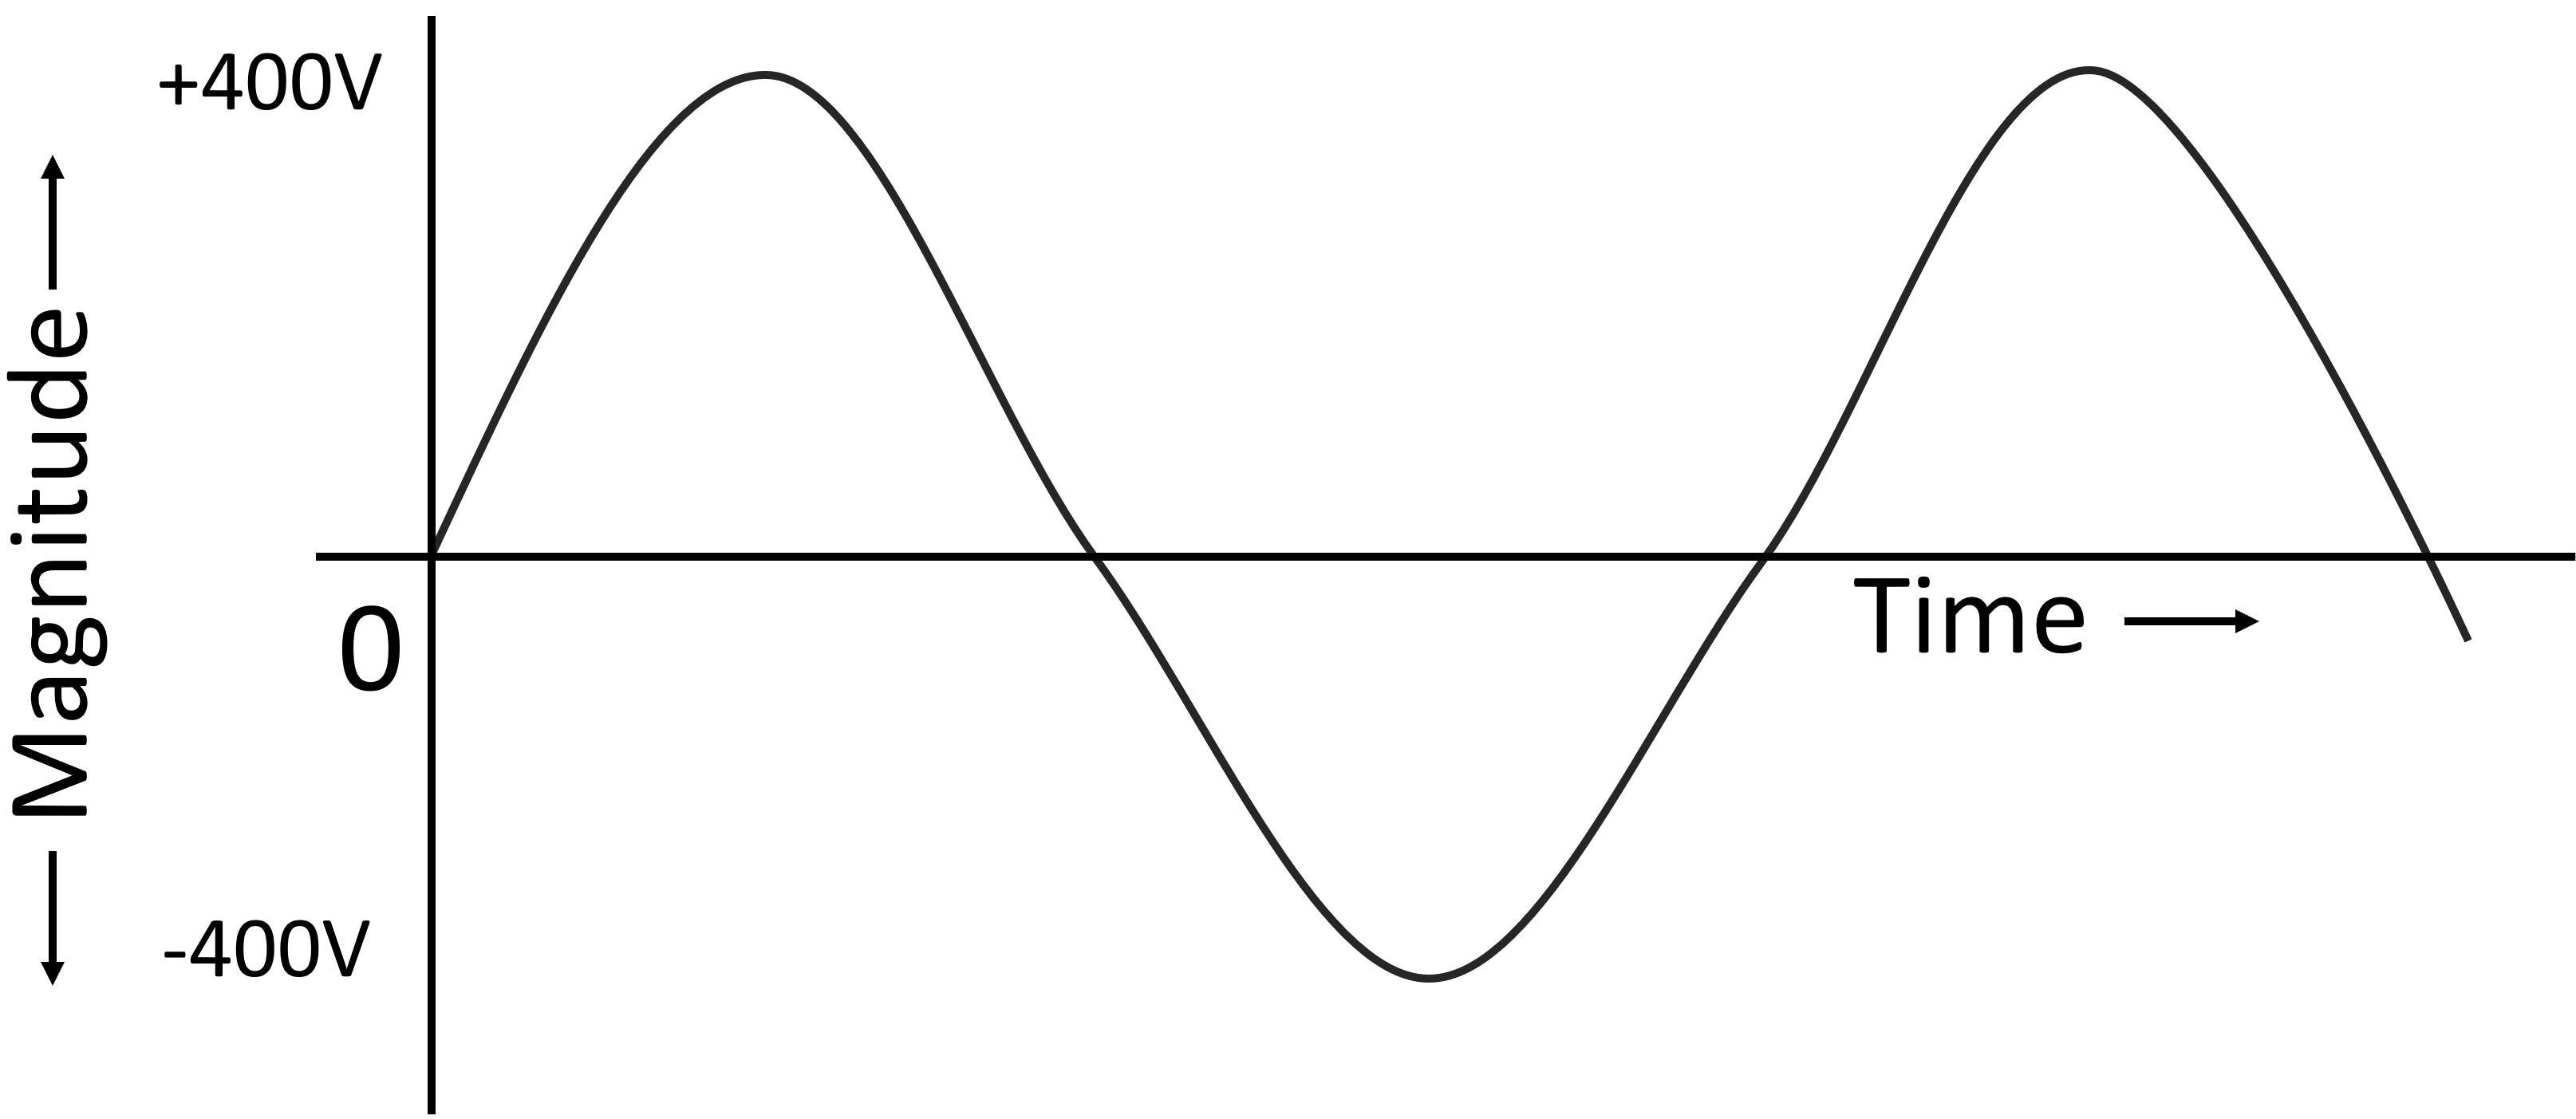 Alternating current graph